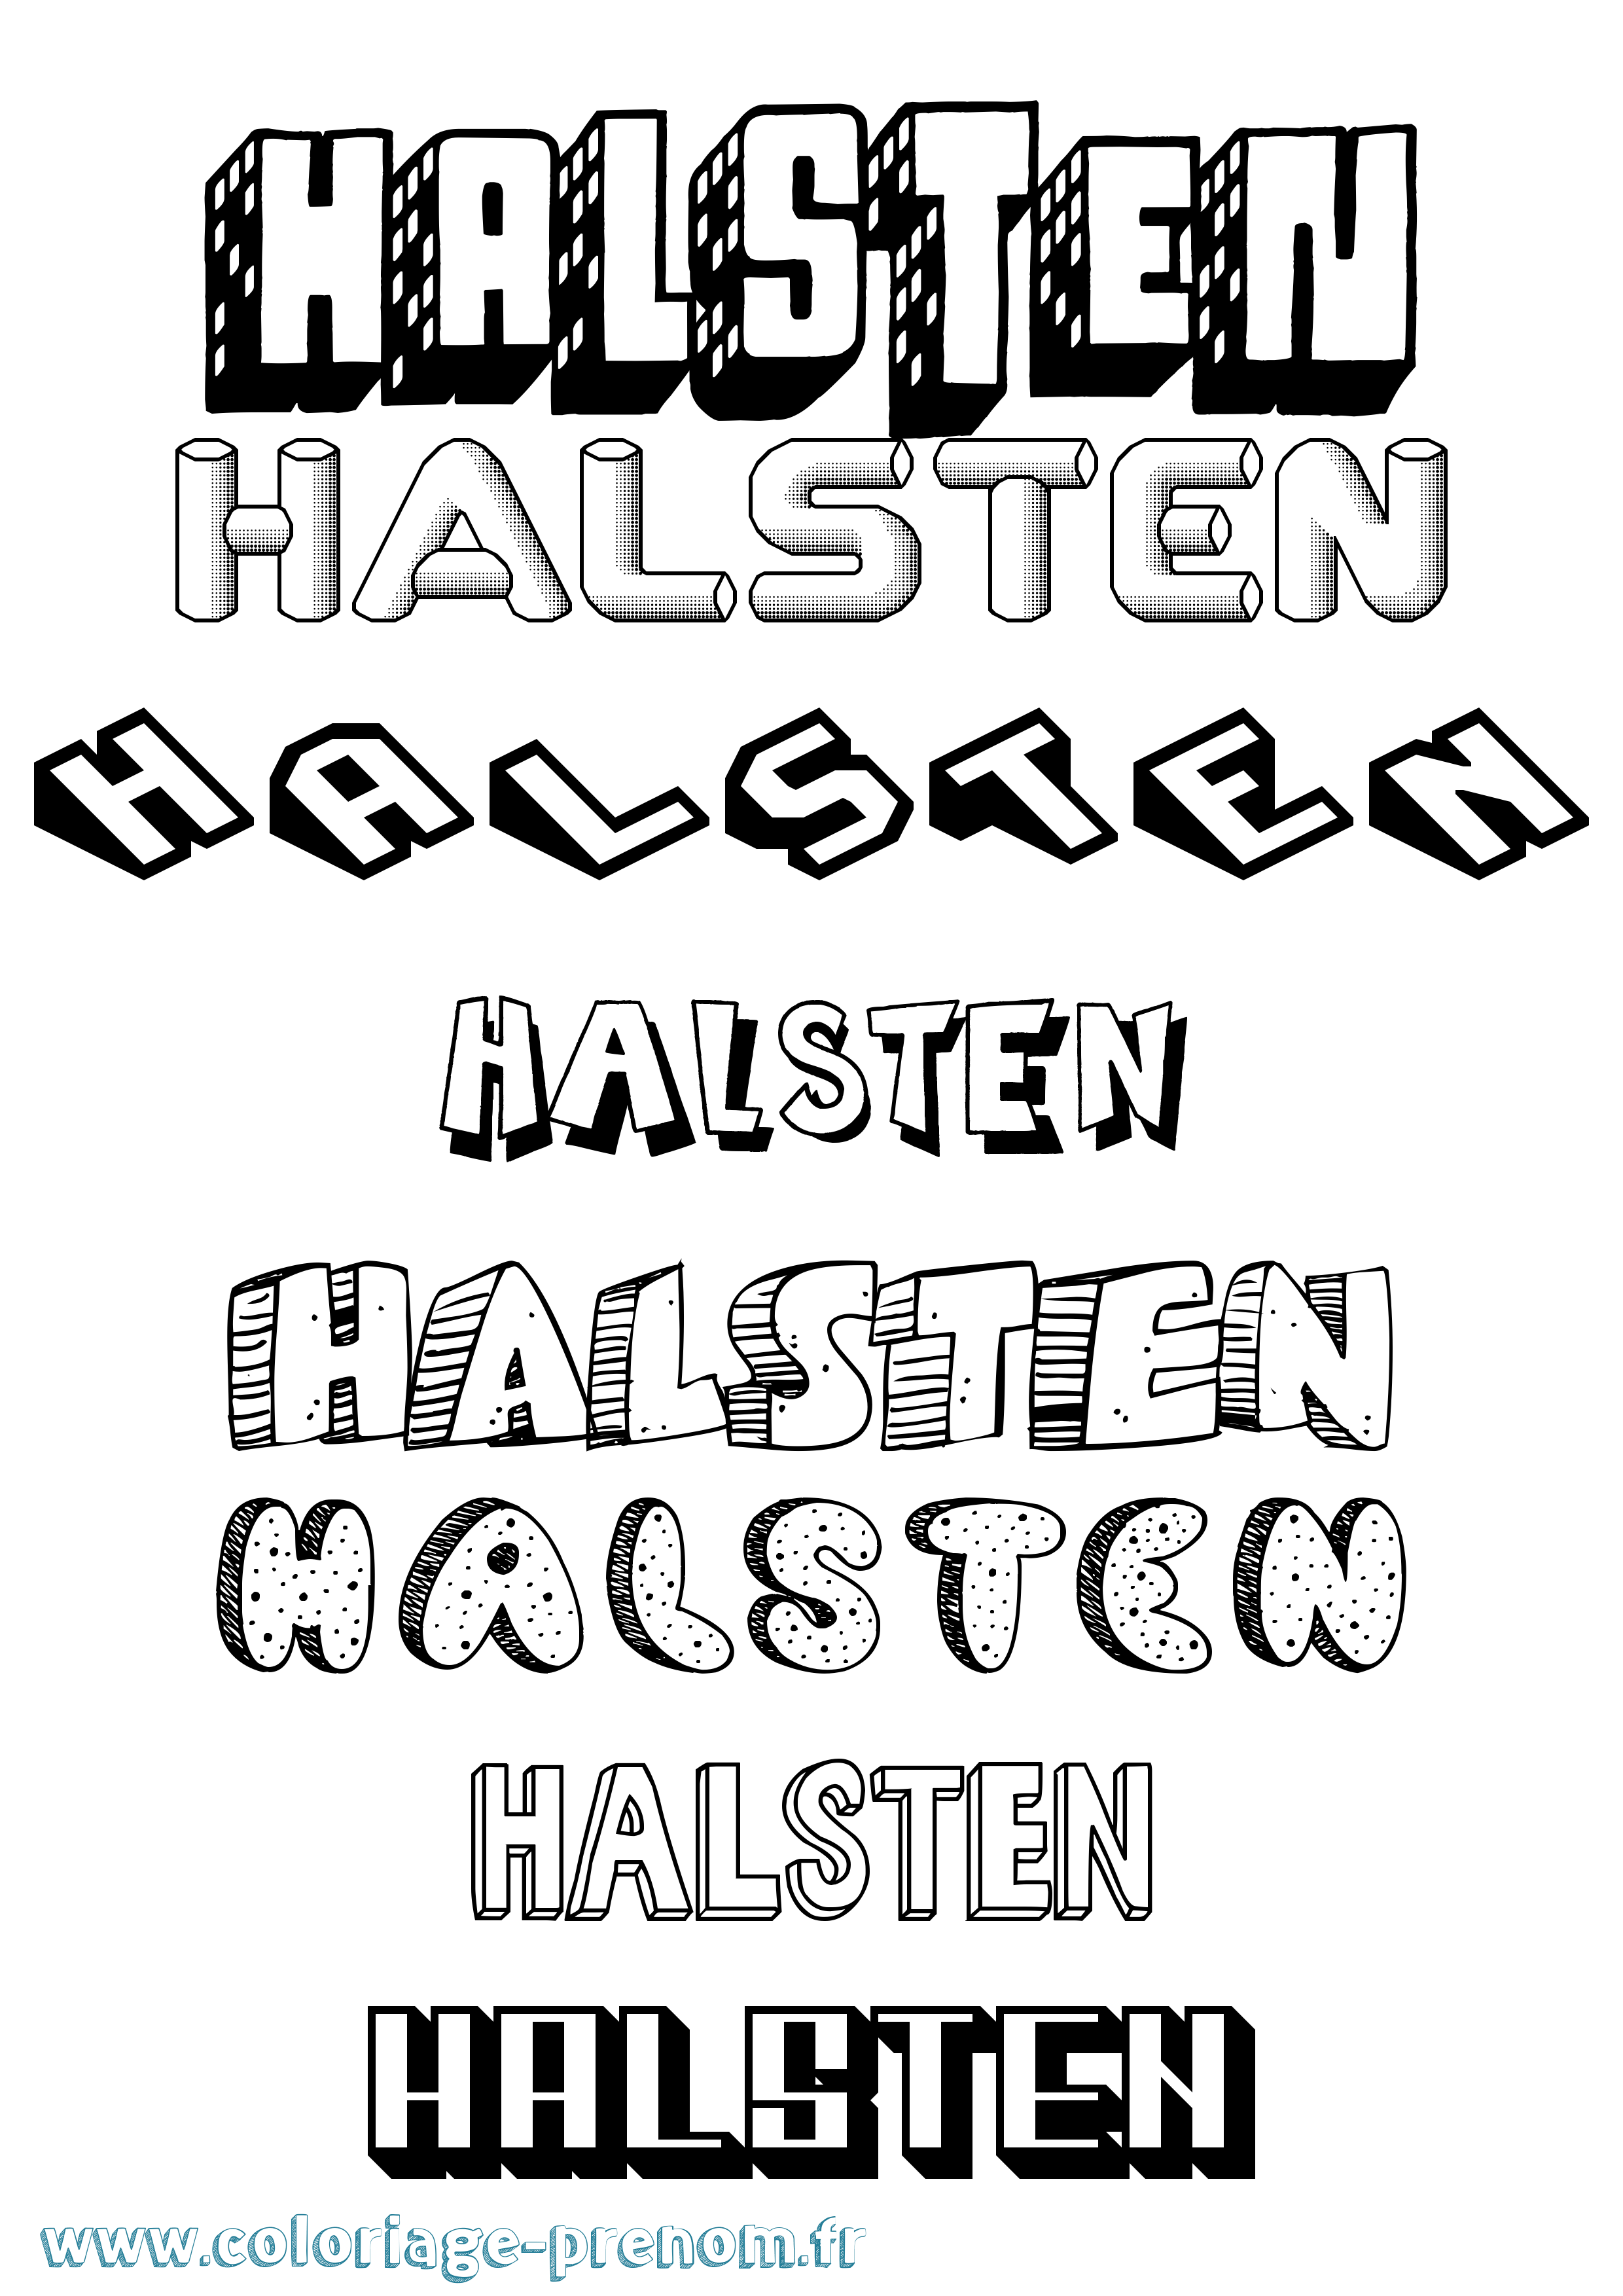 Coloriage prénom Halsten Effet 3D